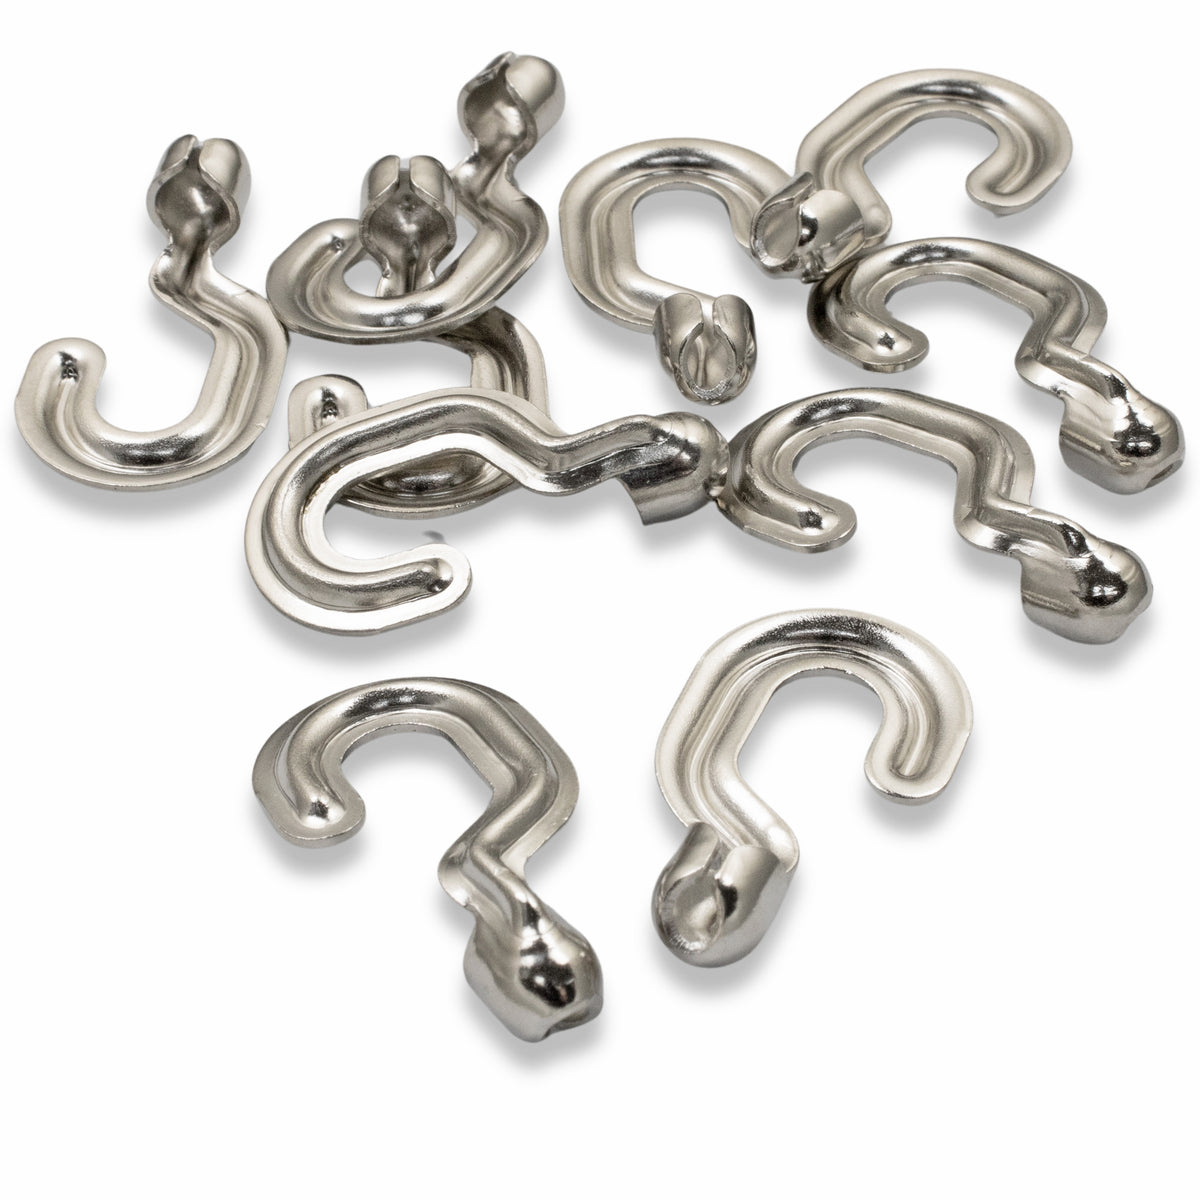 10 Multipurpose A Hooks - #6 Ball Chain - Easy Attachment